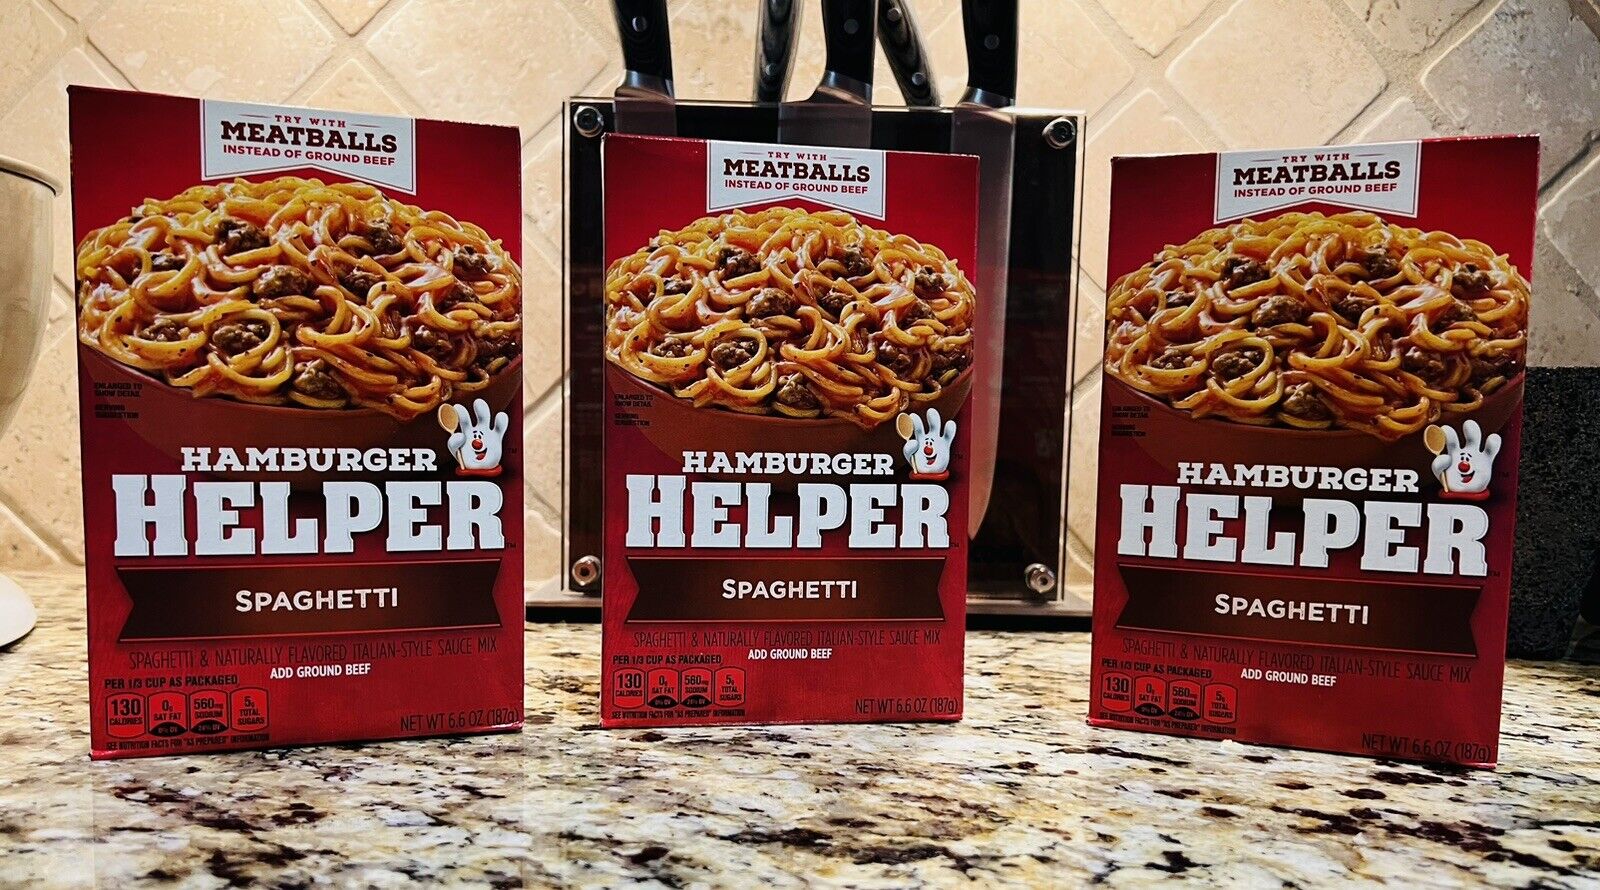 Hamburger Helper Spaghetti 6.6Oz Box Pack of 3 - Buy More & Save $$$